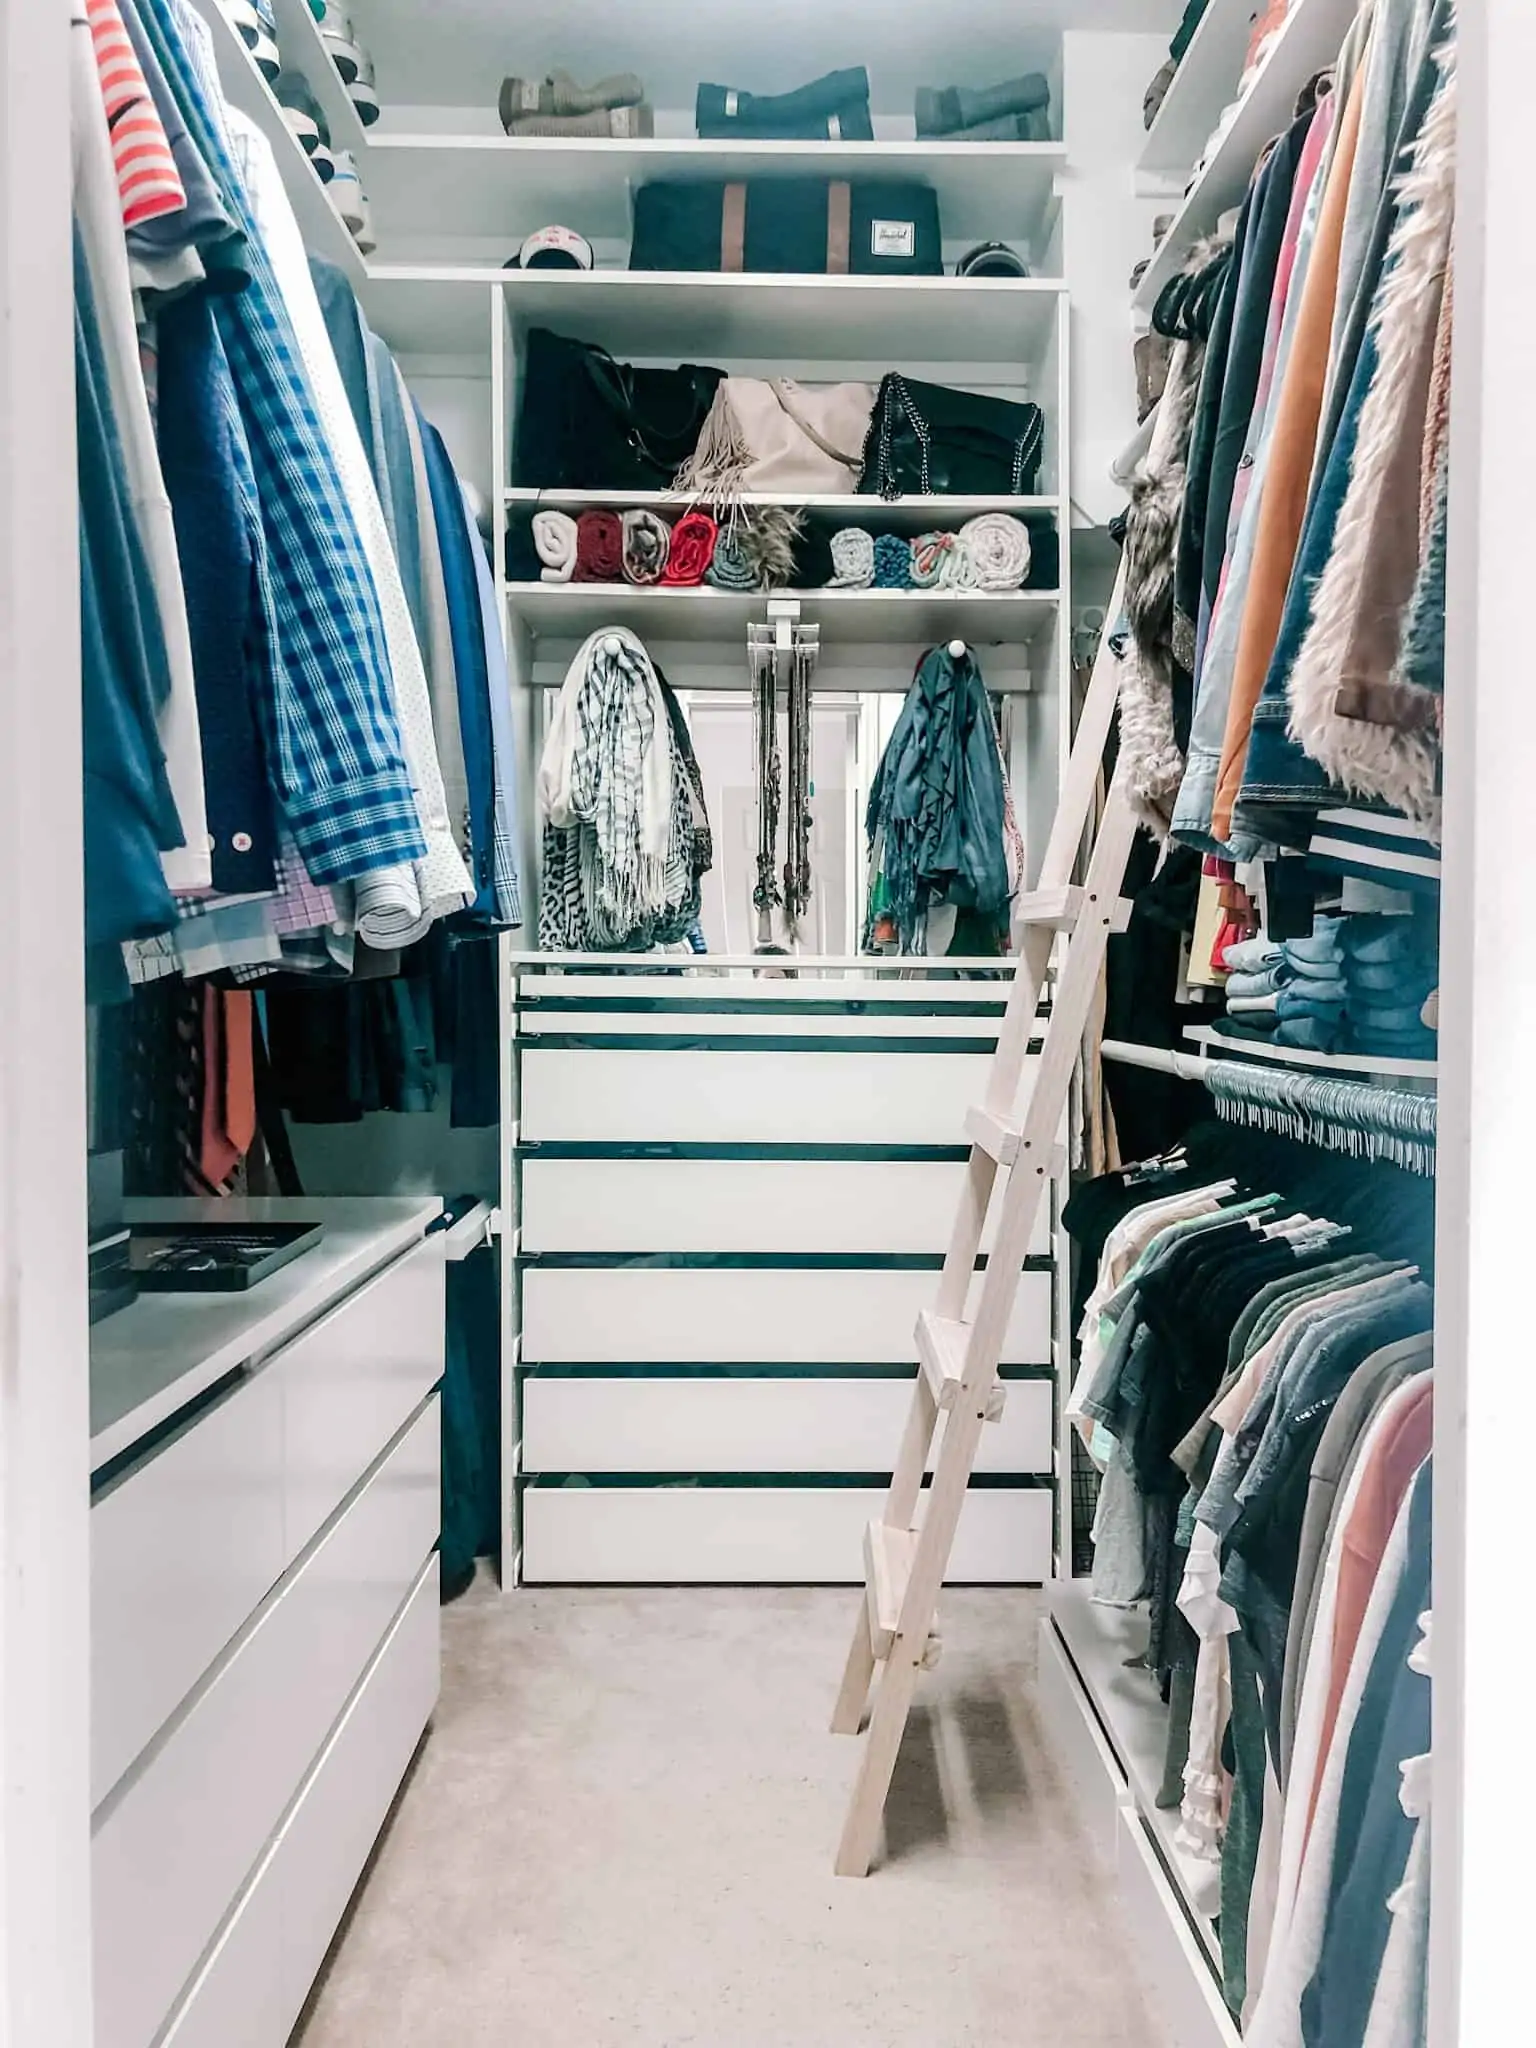 Small Closet Storage Bins, Closet Accessories